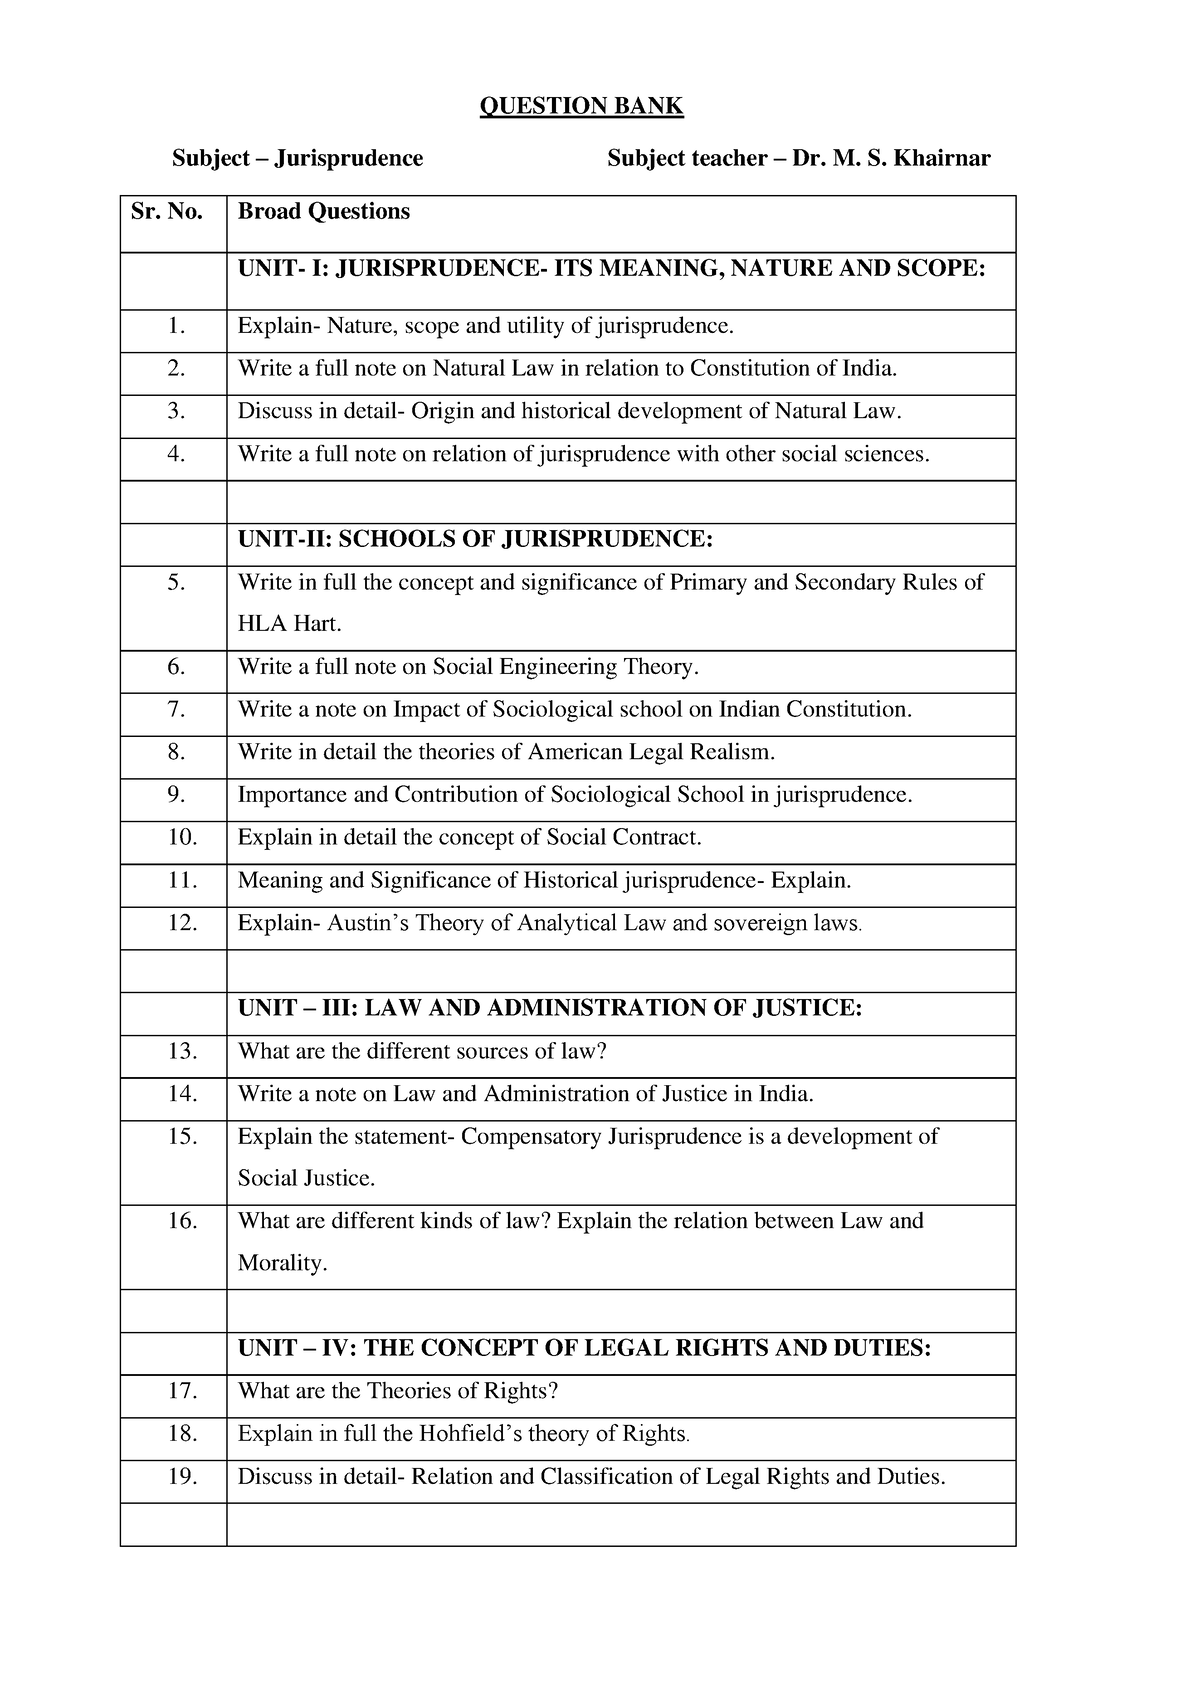 assignment topics on jurisprudence